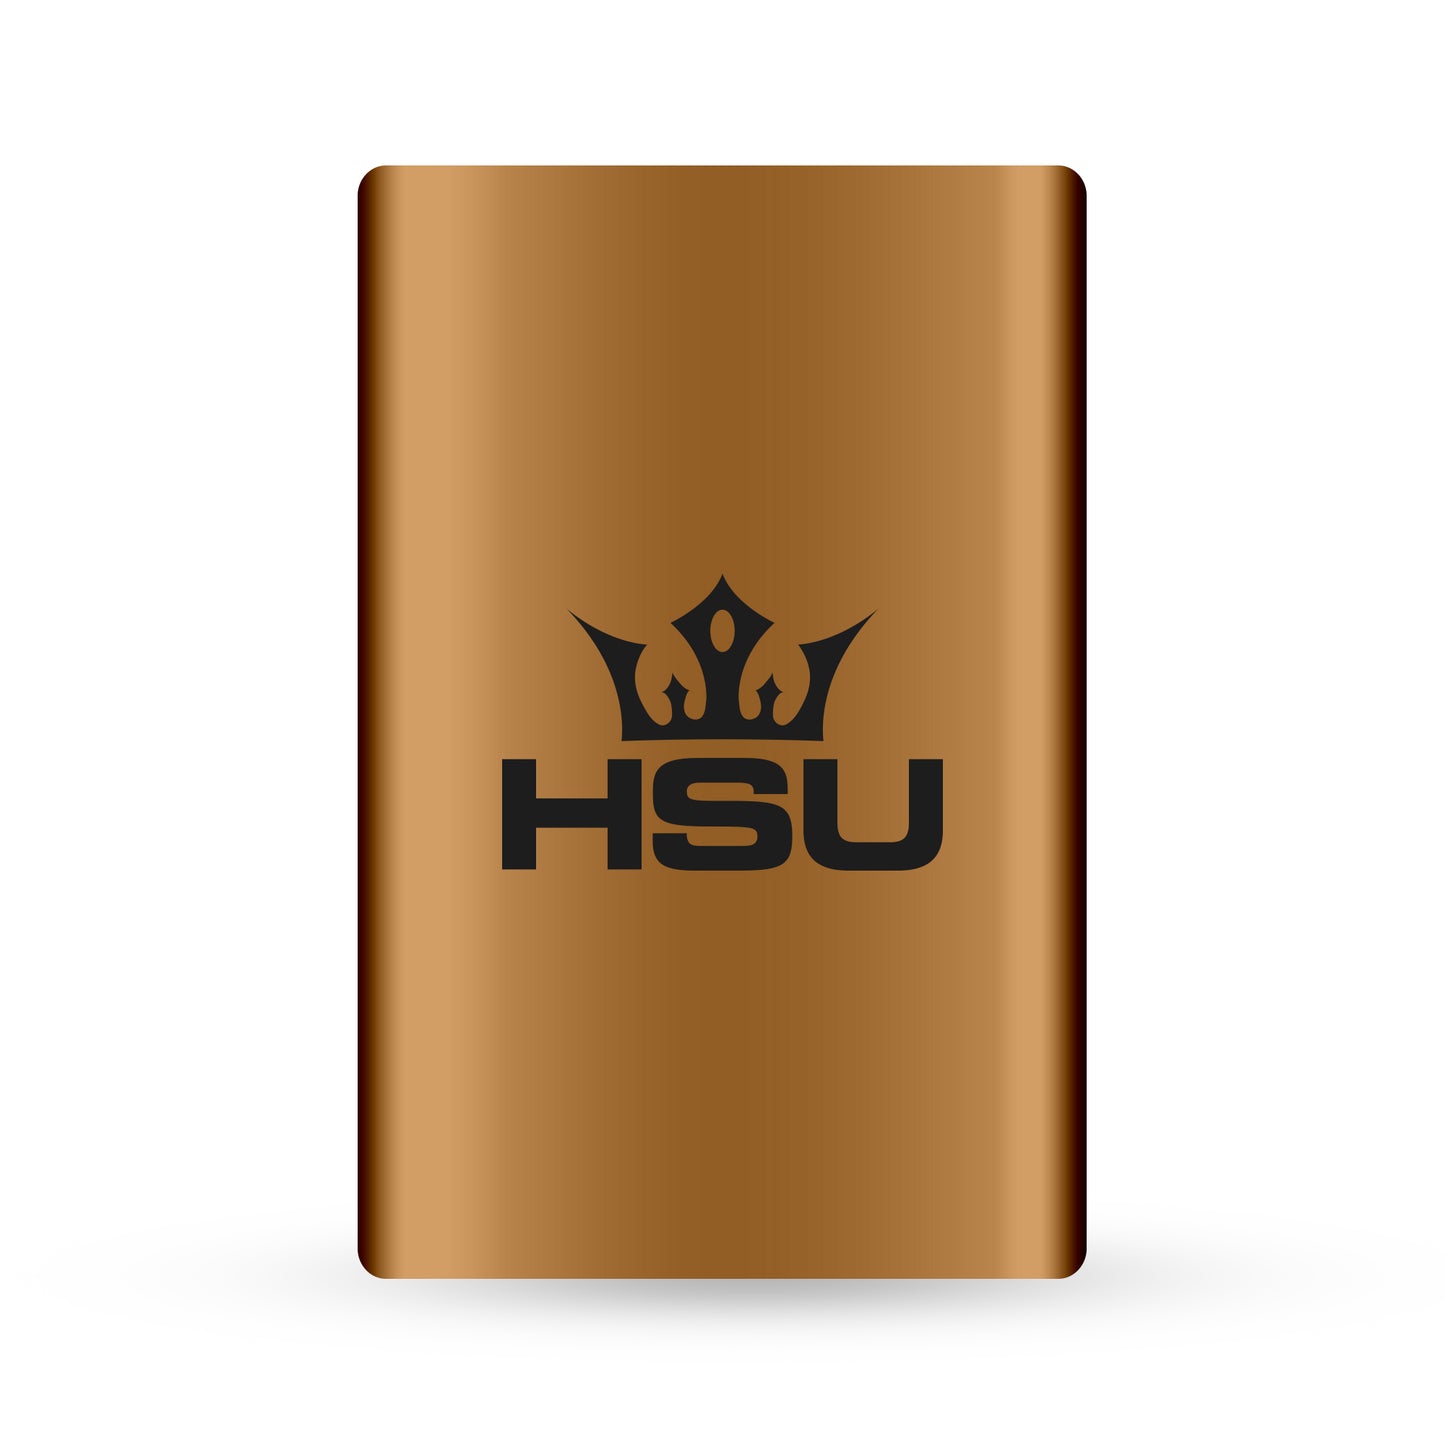 HSU Portable Powerbank Charger (Gold)